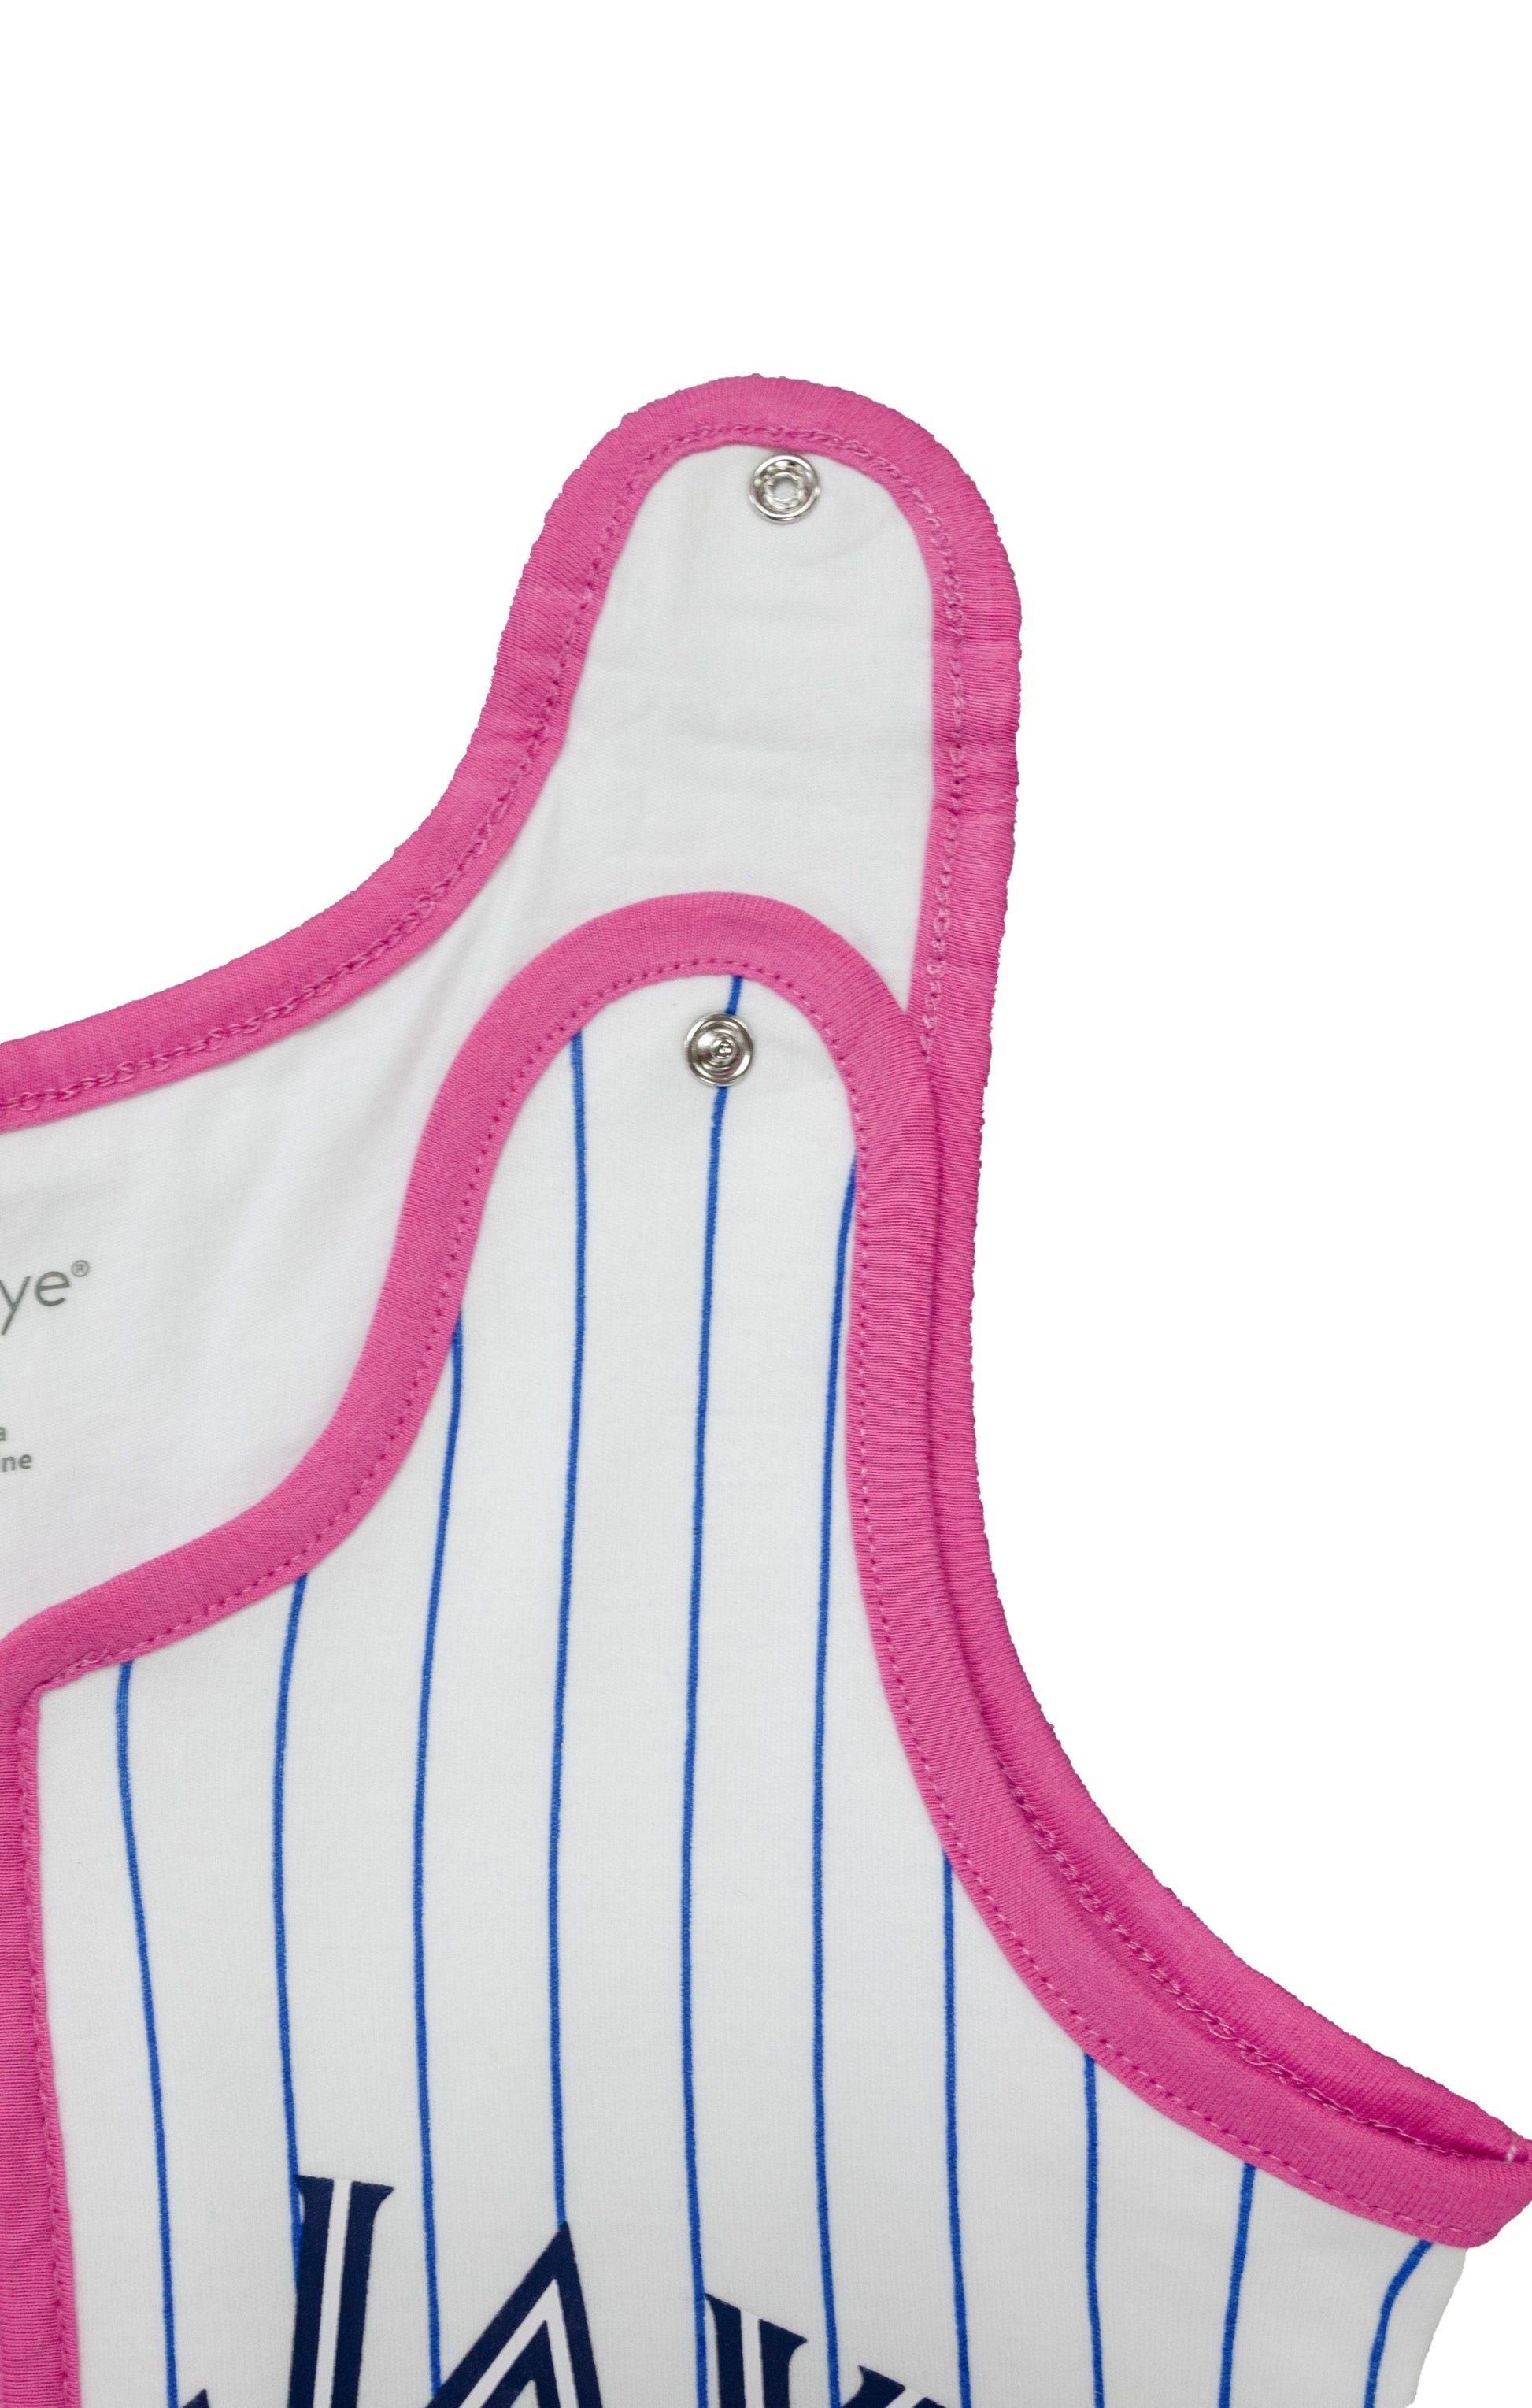 Gertex MLB Toronto Blue Jays Baby & Toddler Sleeveless Sleep Bag (Pink)